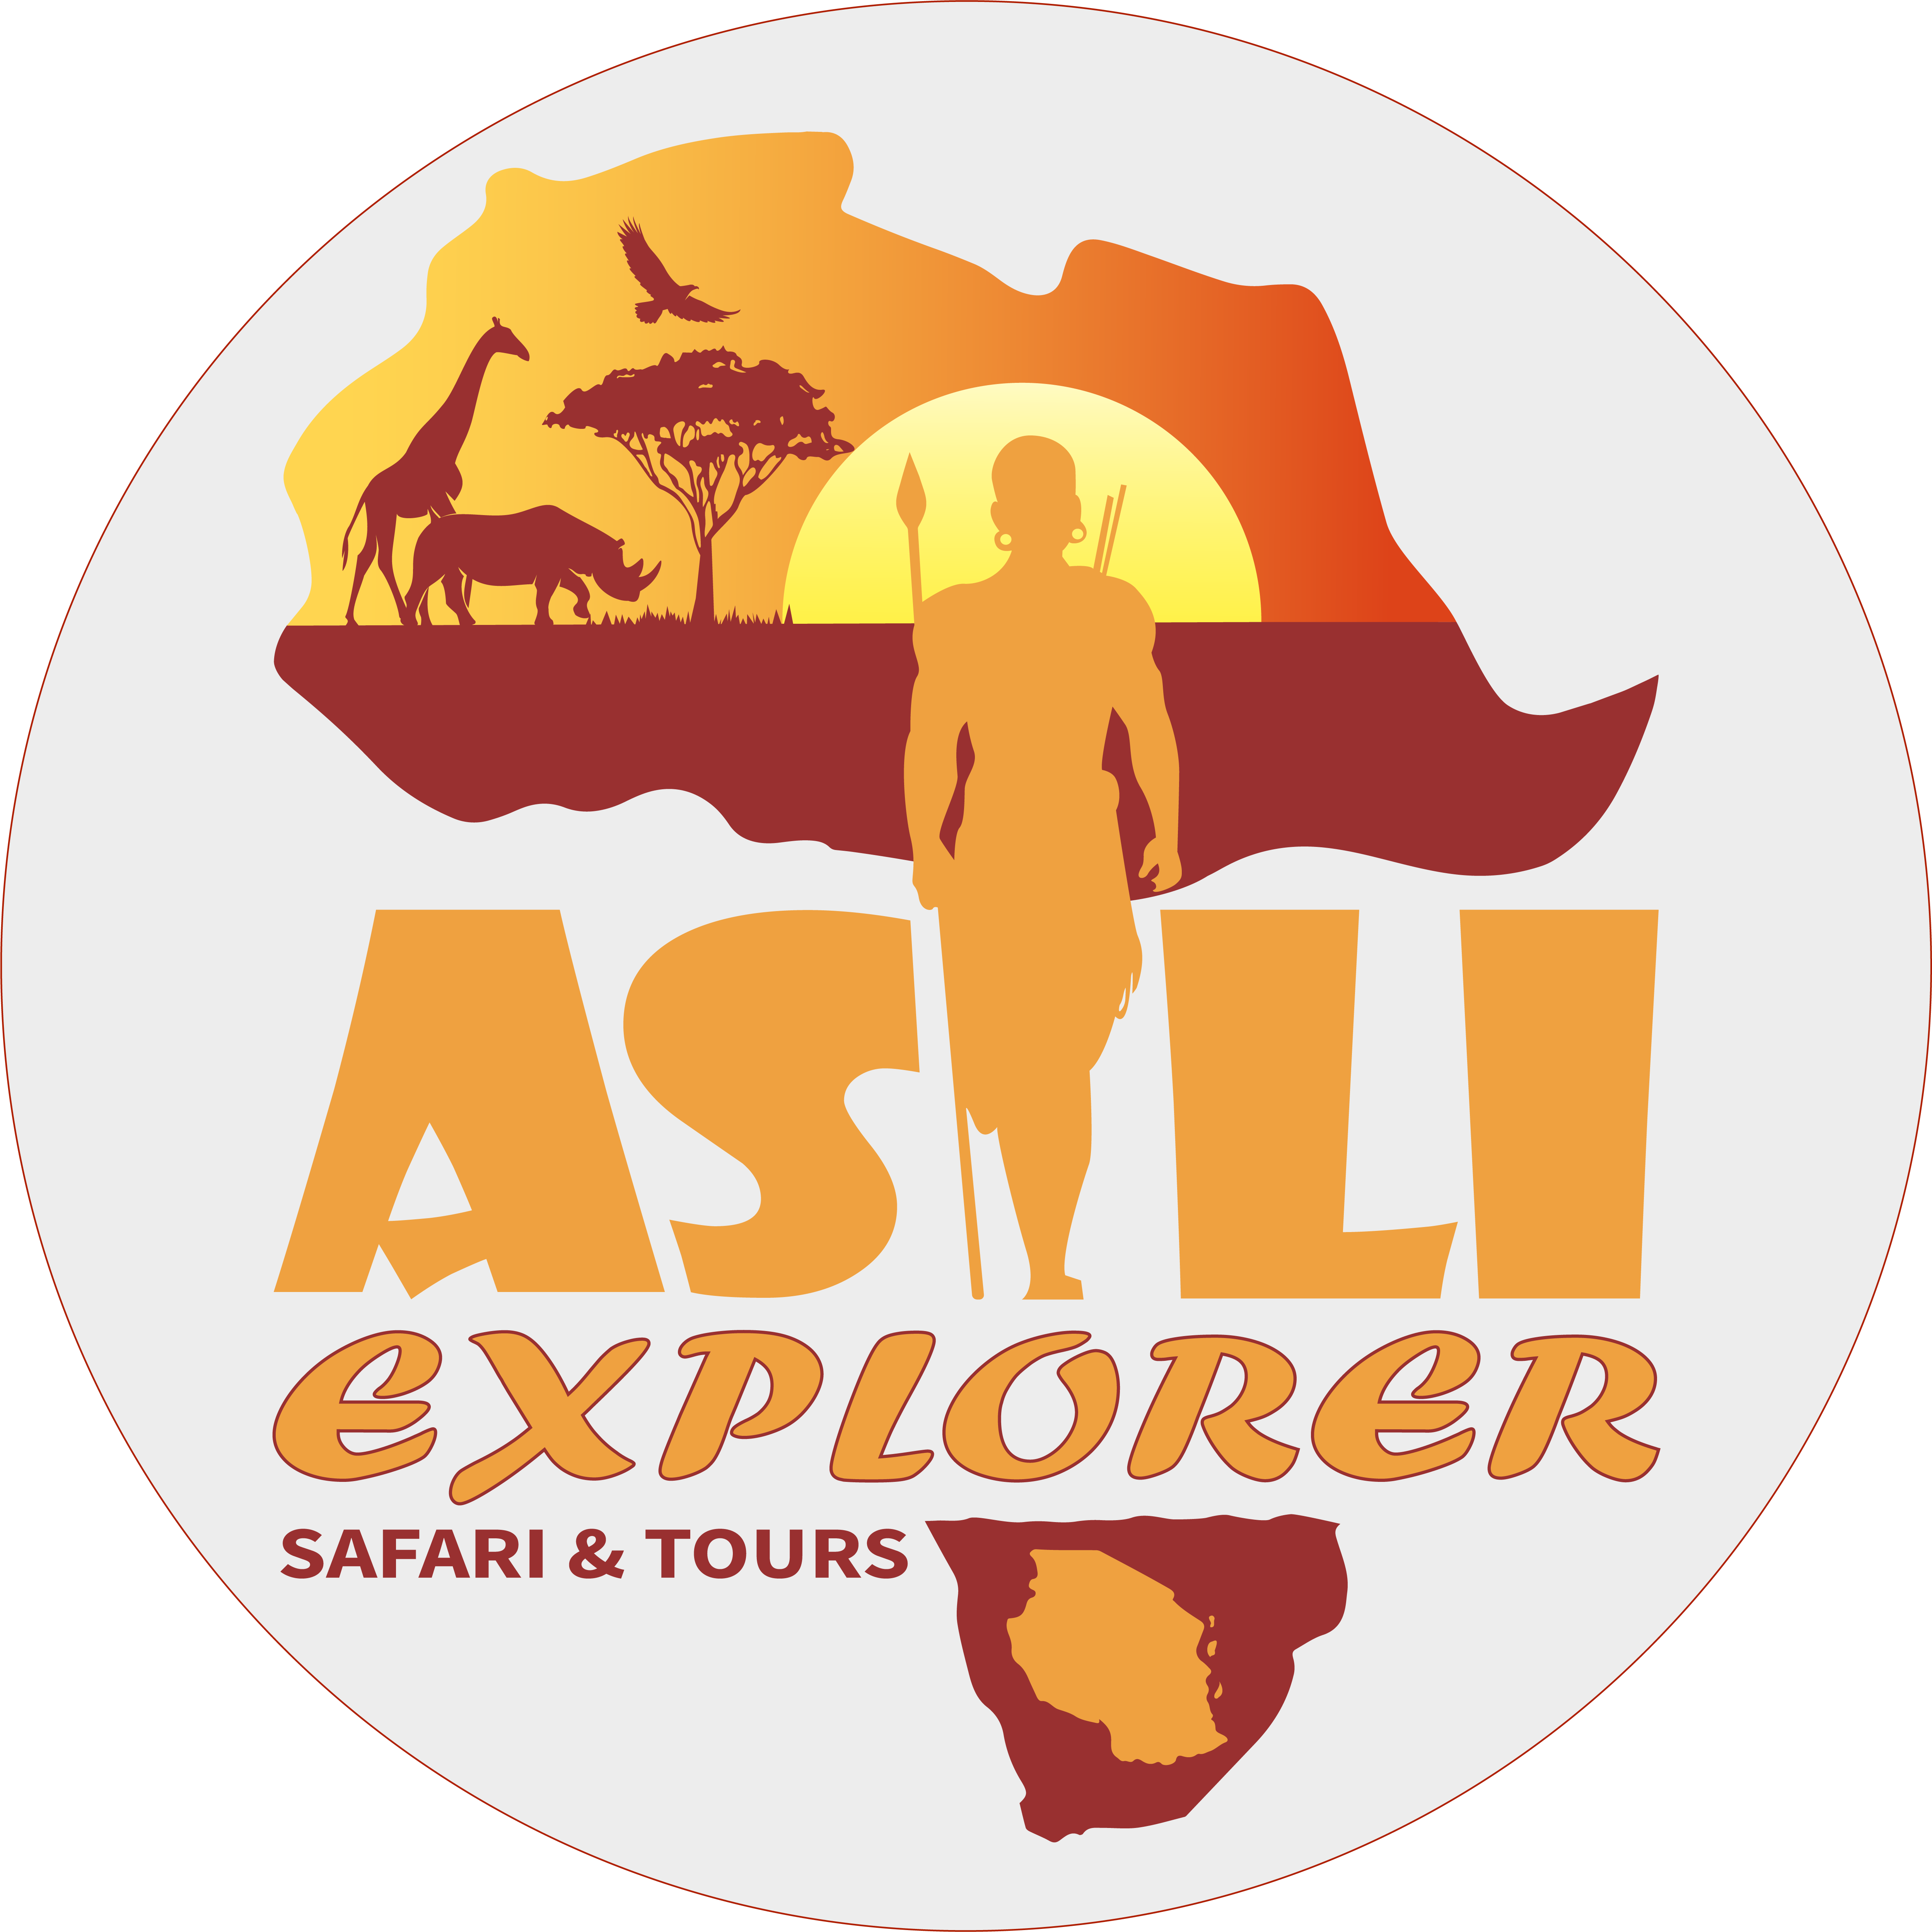 Asili Explorer Limited